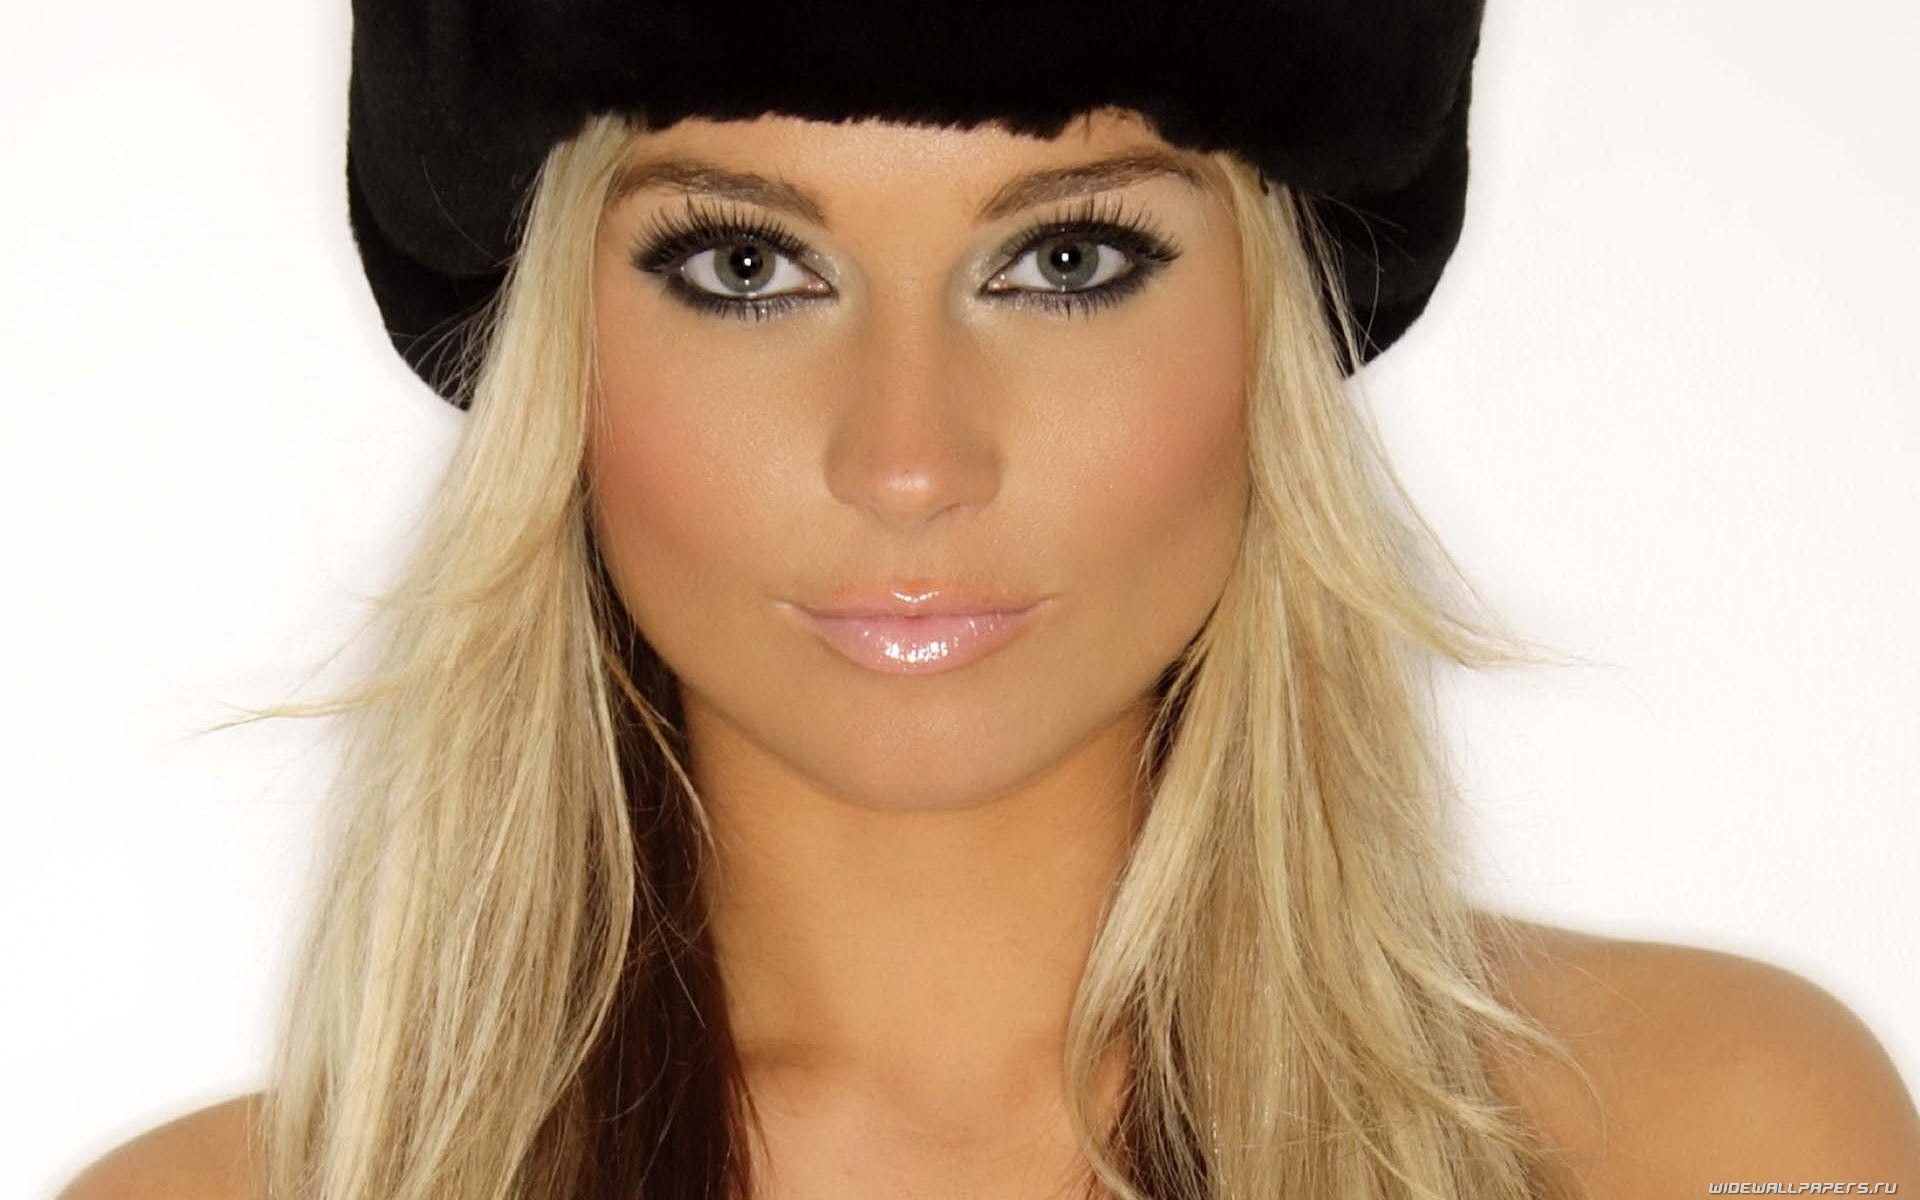 blondes, women, Amanda Harrington, hats, faces - desktop wallpaper